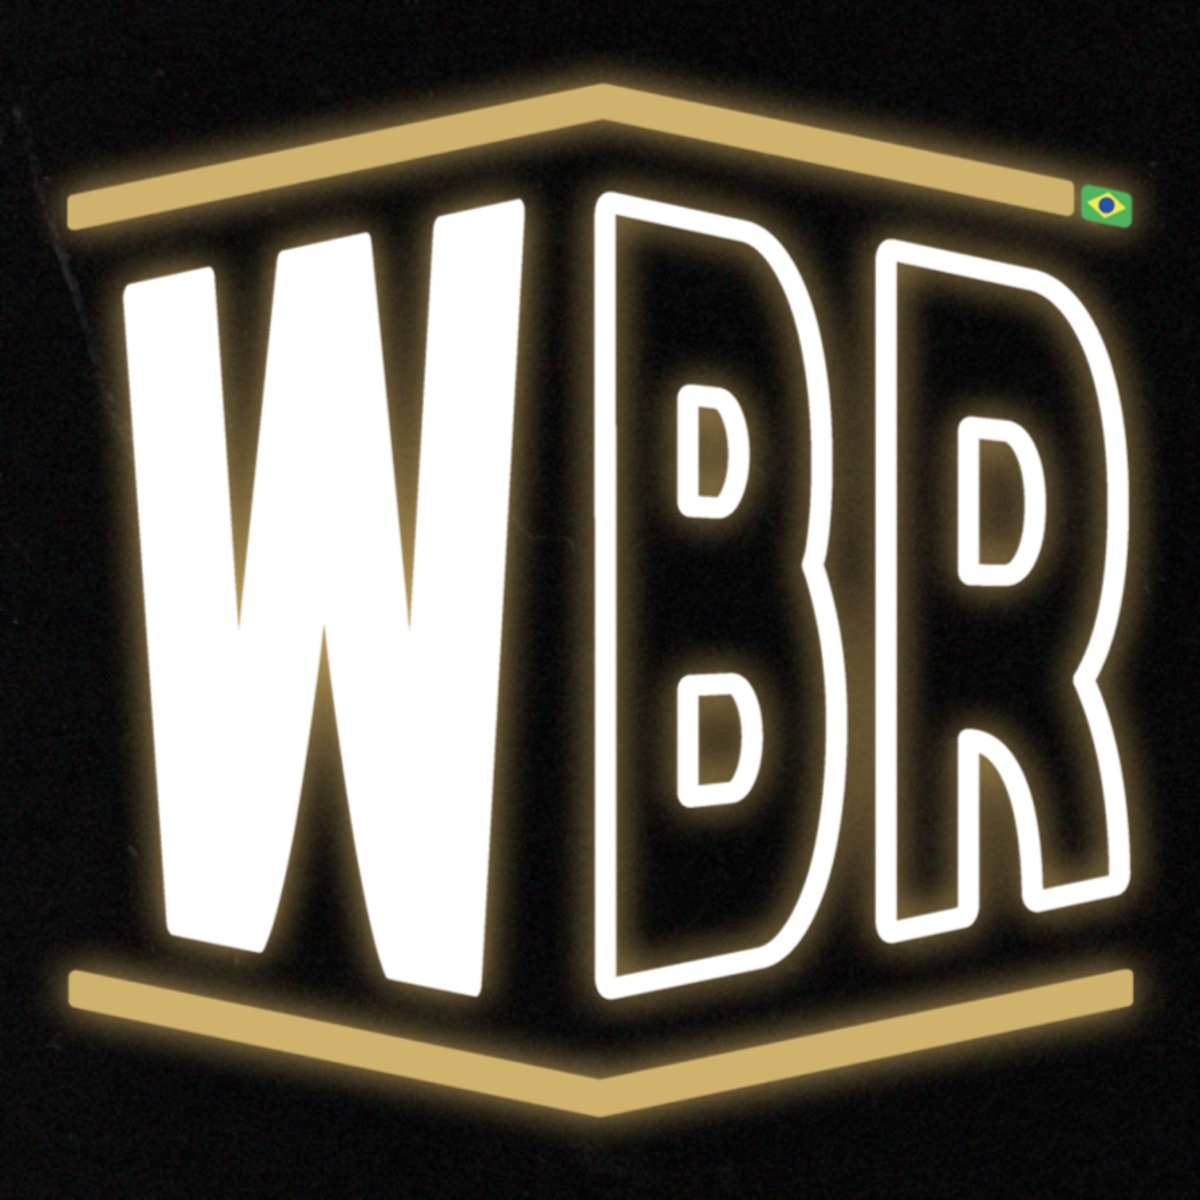 WrestleBR on Apple Podcasts